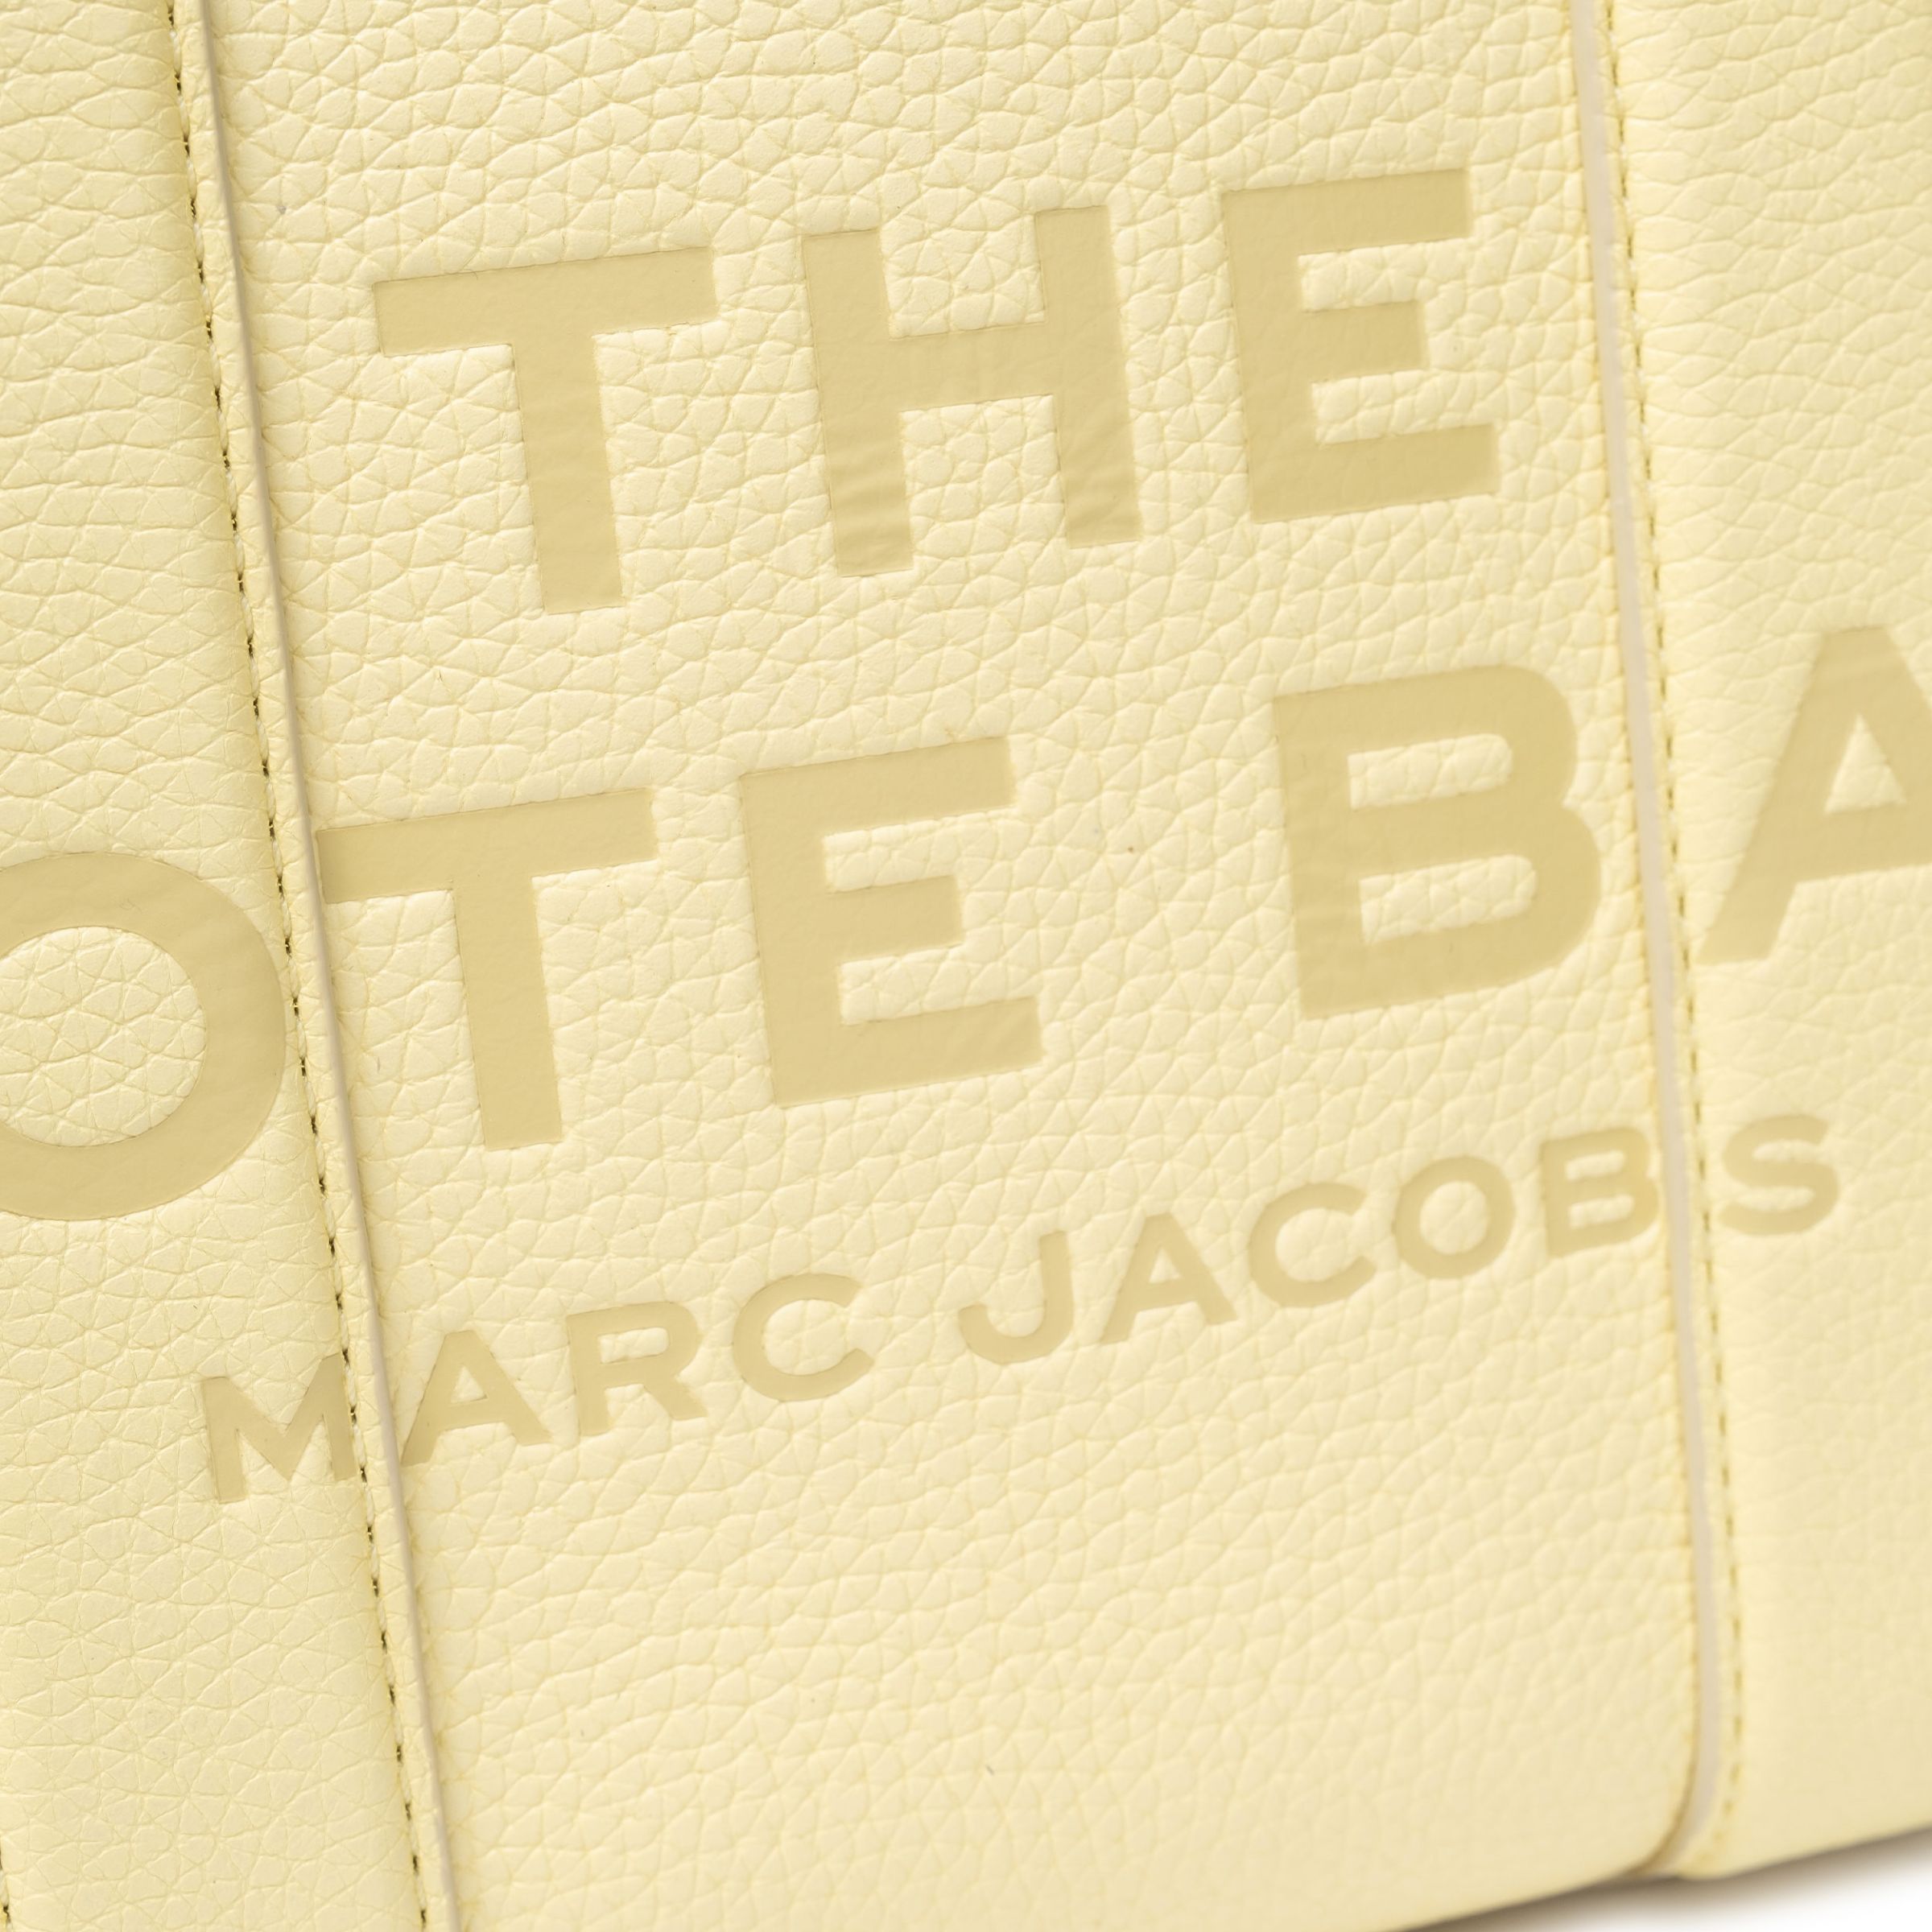 Сумка Marc Jacobs Mini Tote Bag желтая